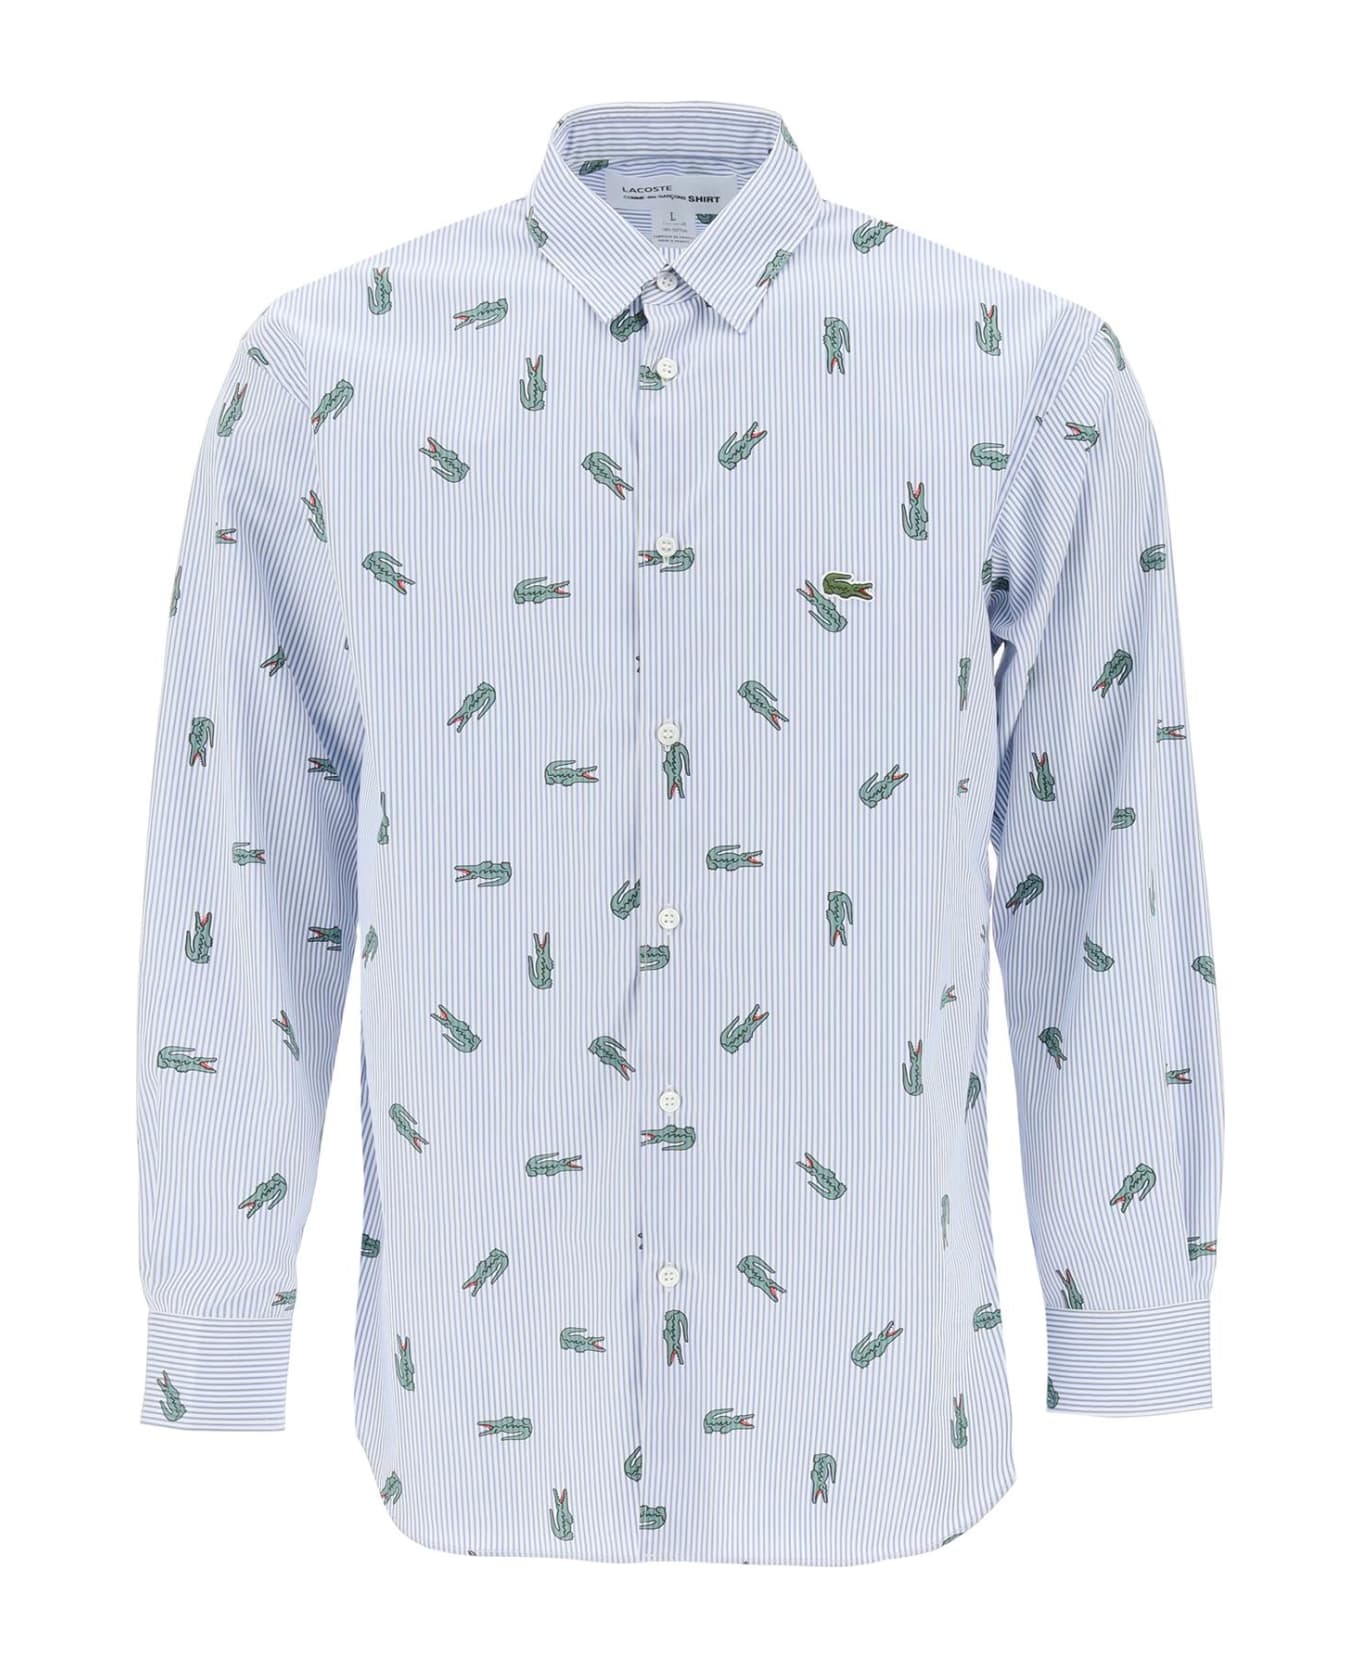 Comme des Garçons Shirt X Lacoste Oxford Shirt With Crocodile Motif - STRIPE (White) シャツ